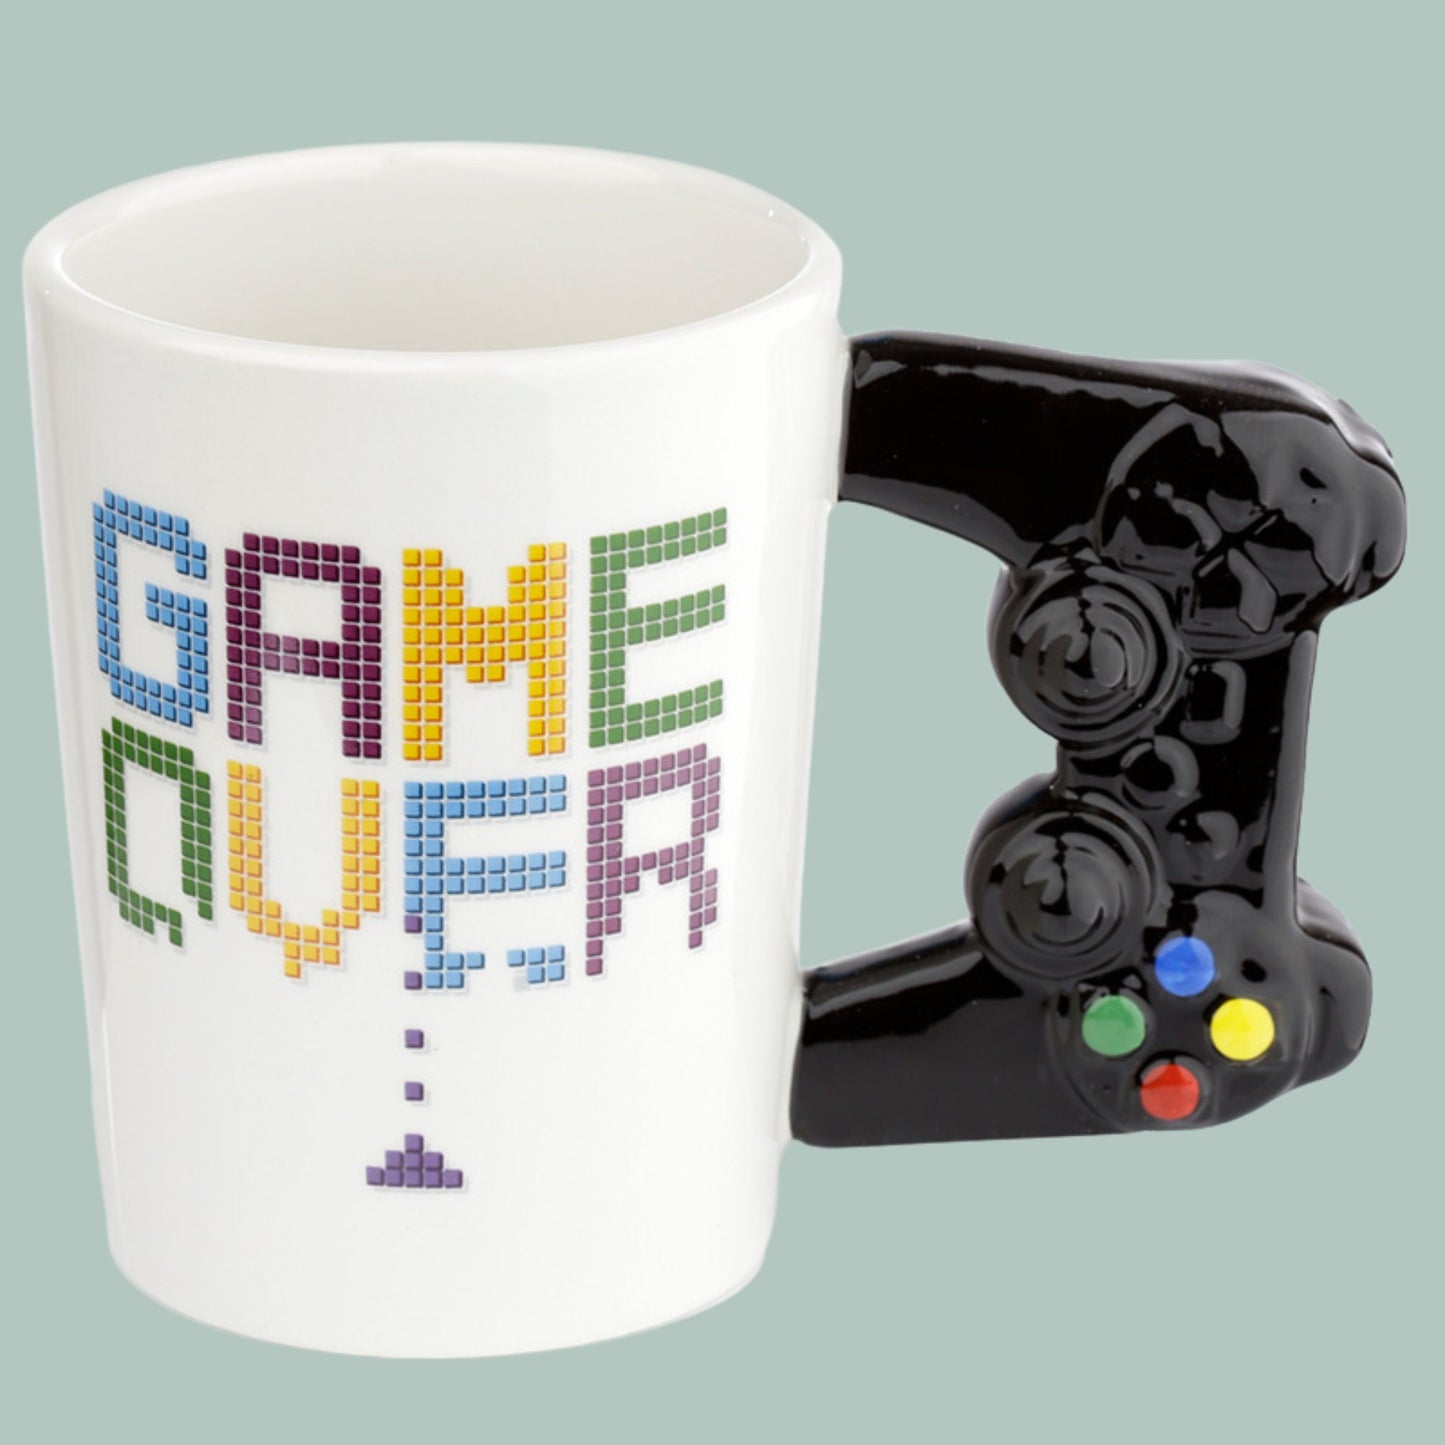 Game Over Gamer Mug with Joypad Shaped Handle